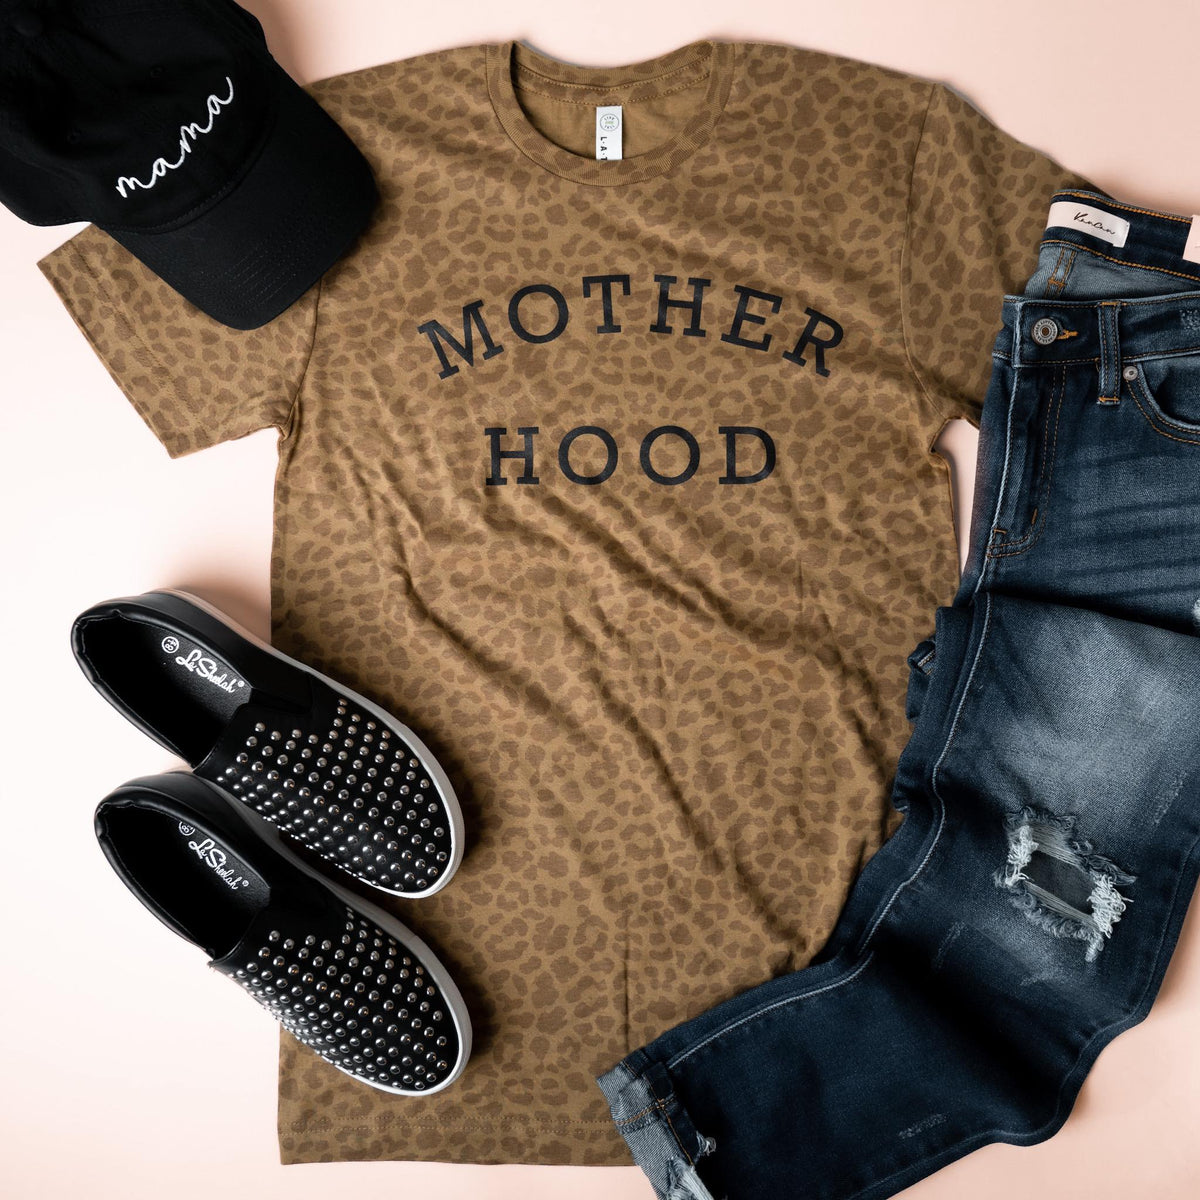 Mother Hood Graphic Tee